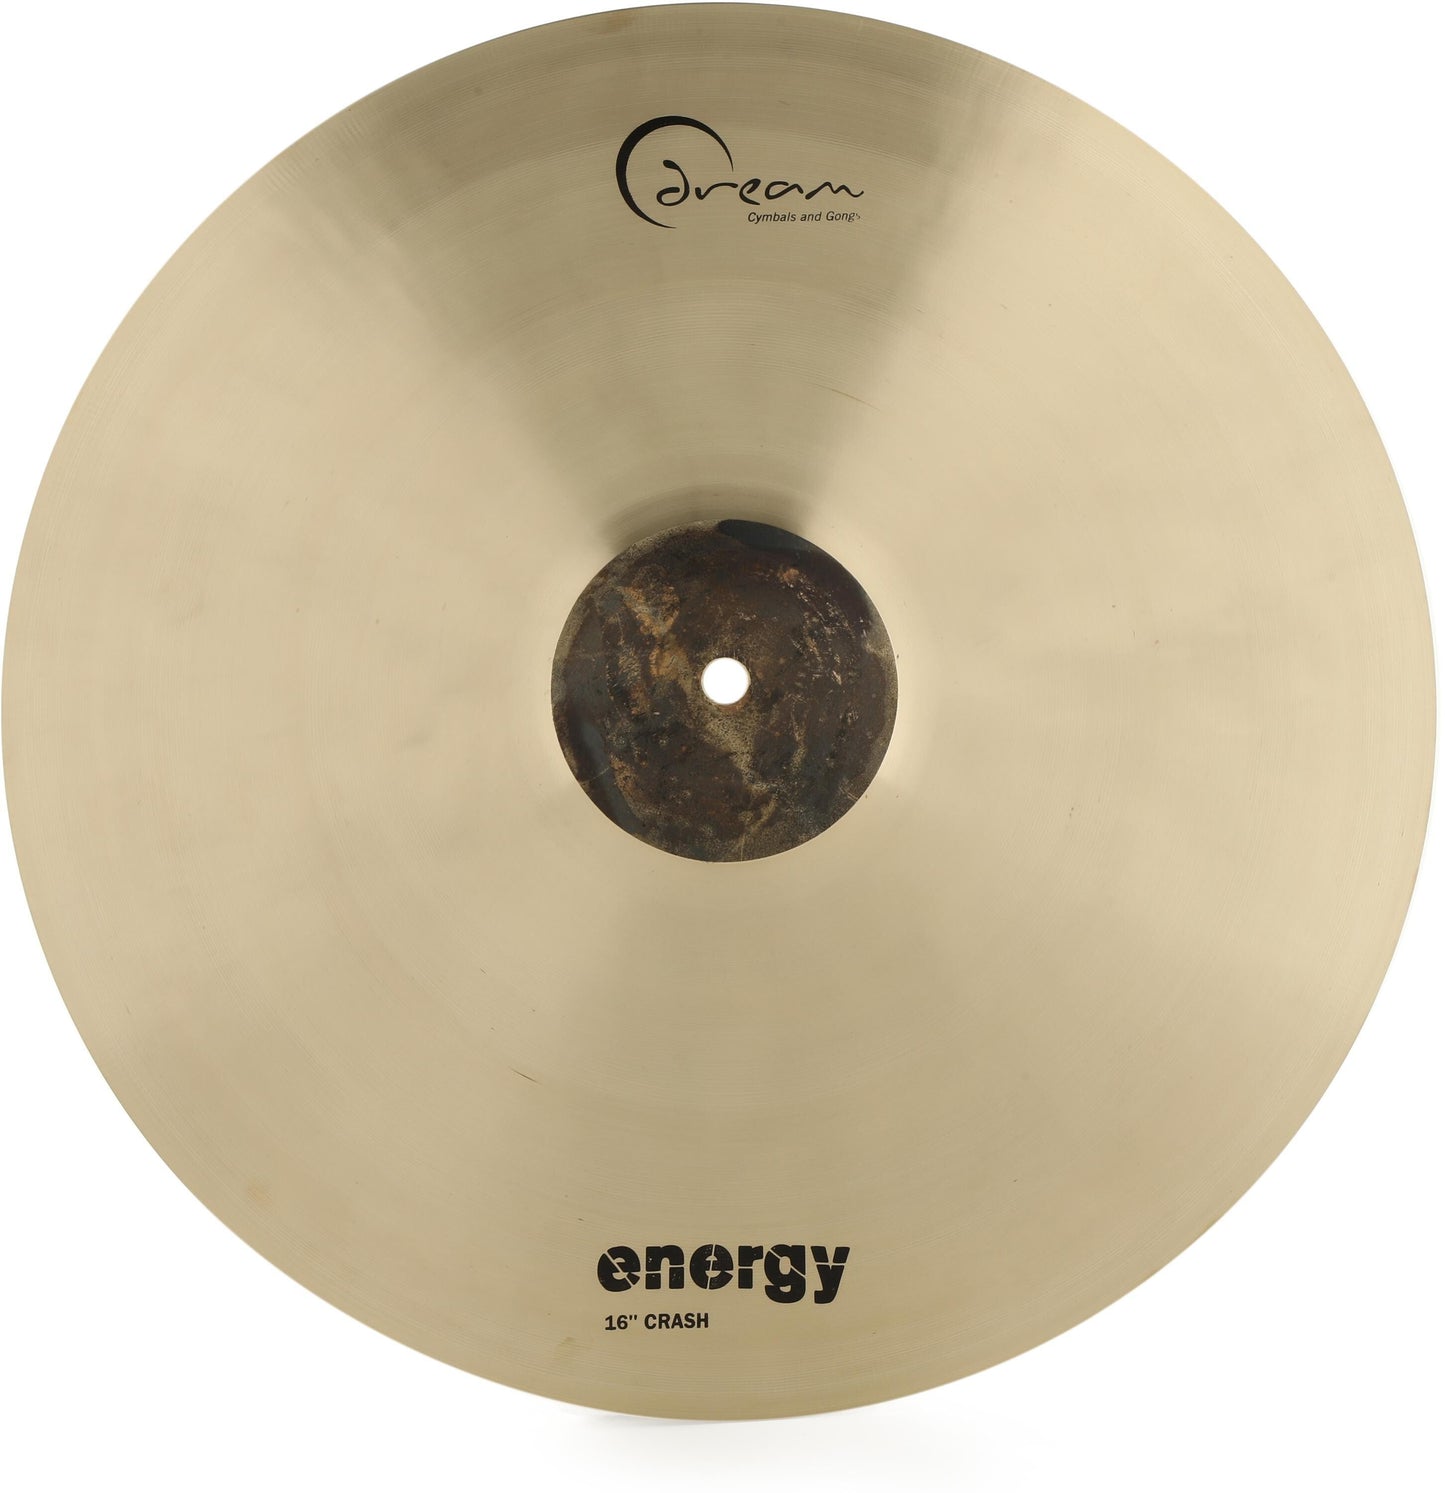 Dream 16” Energy Crash Cymbal